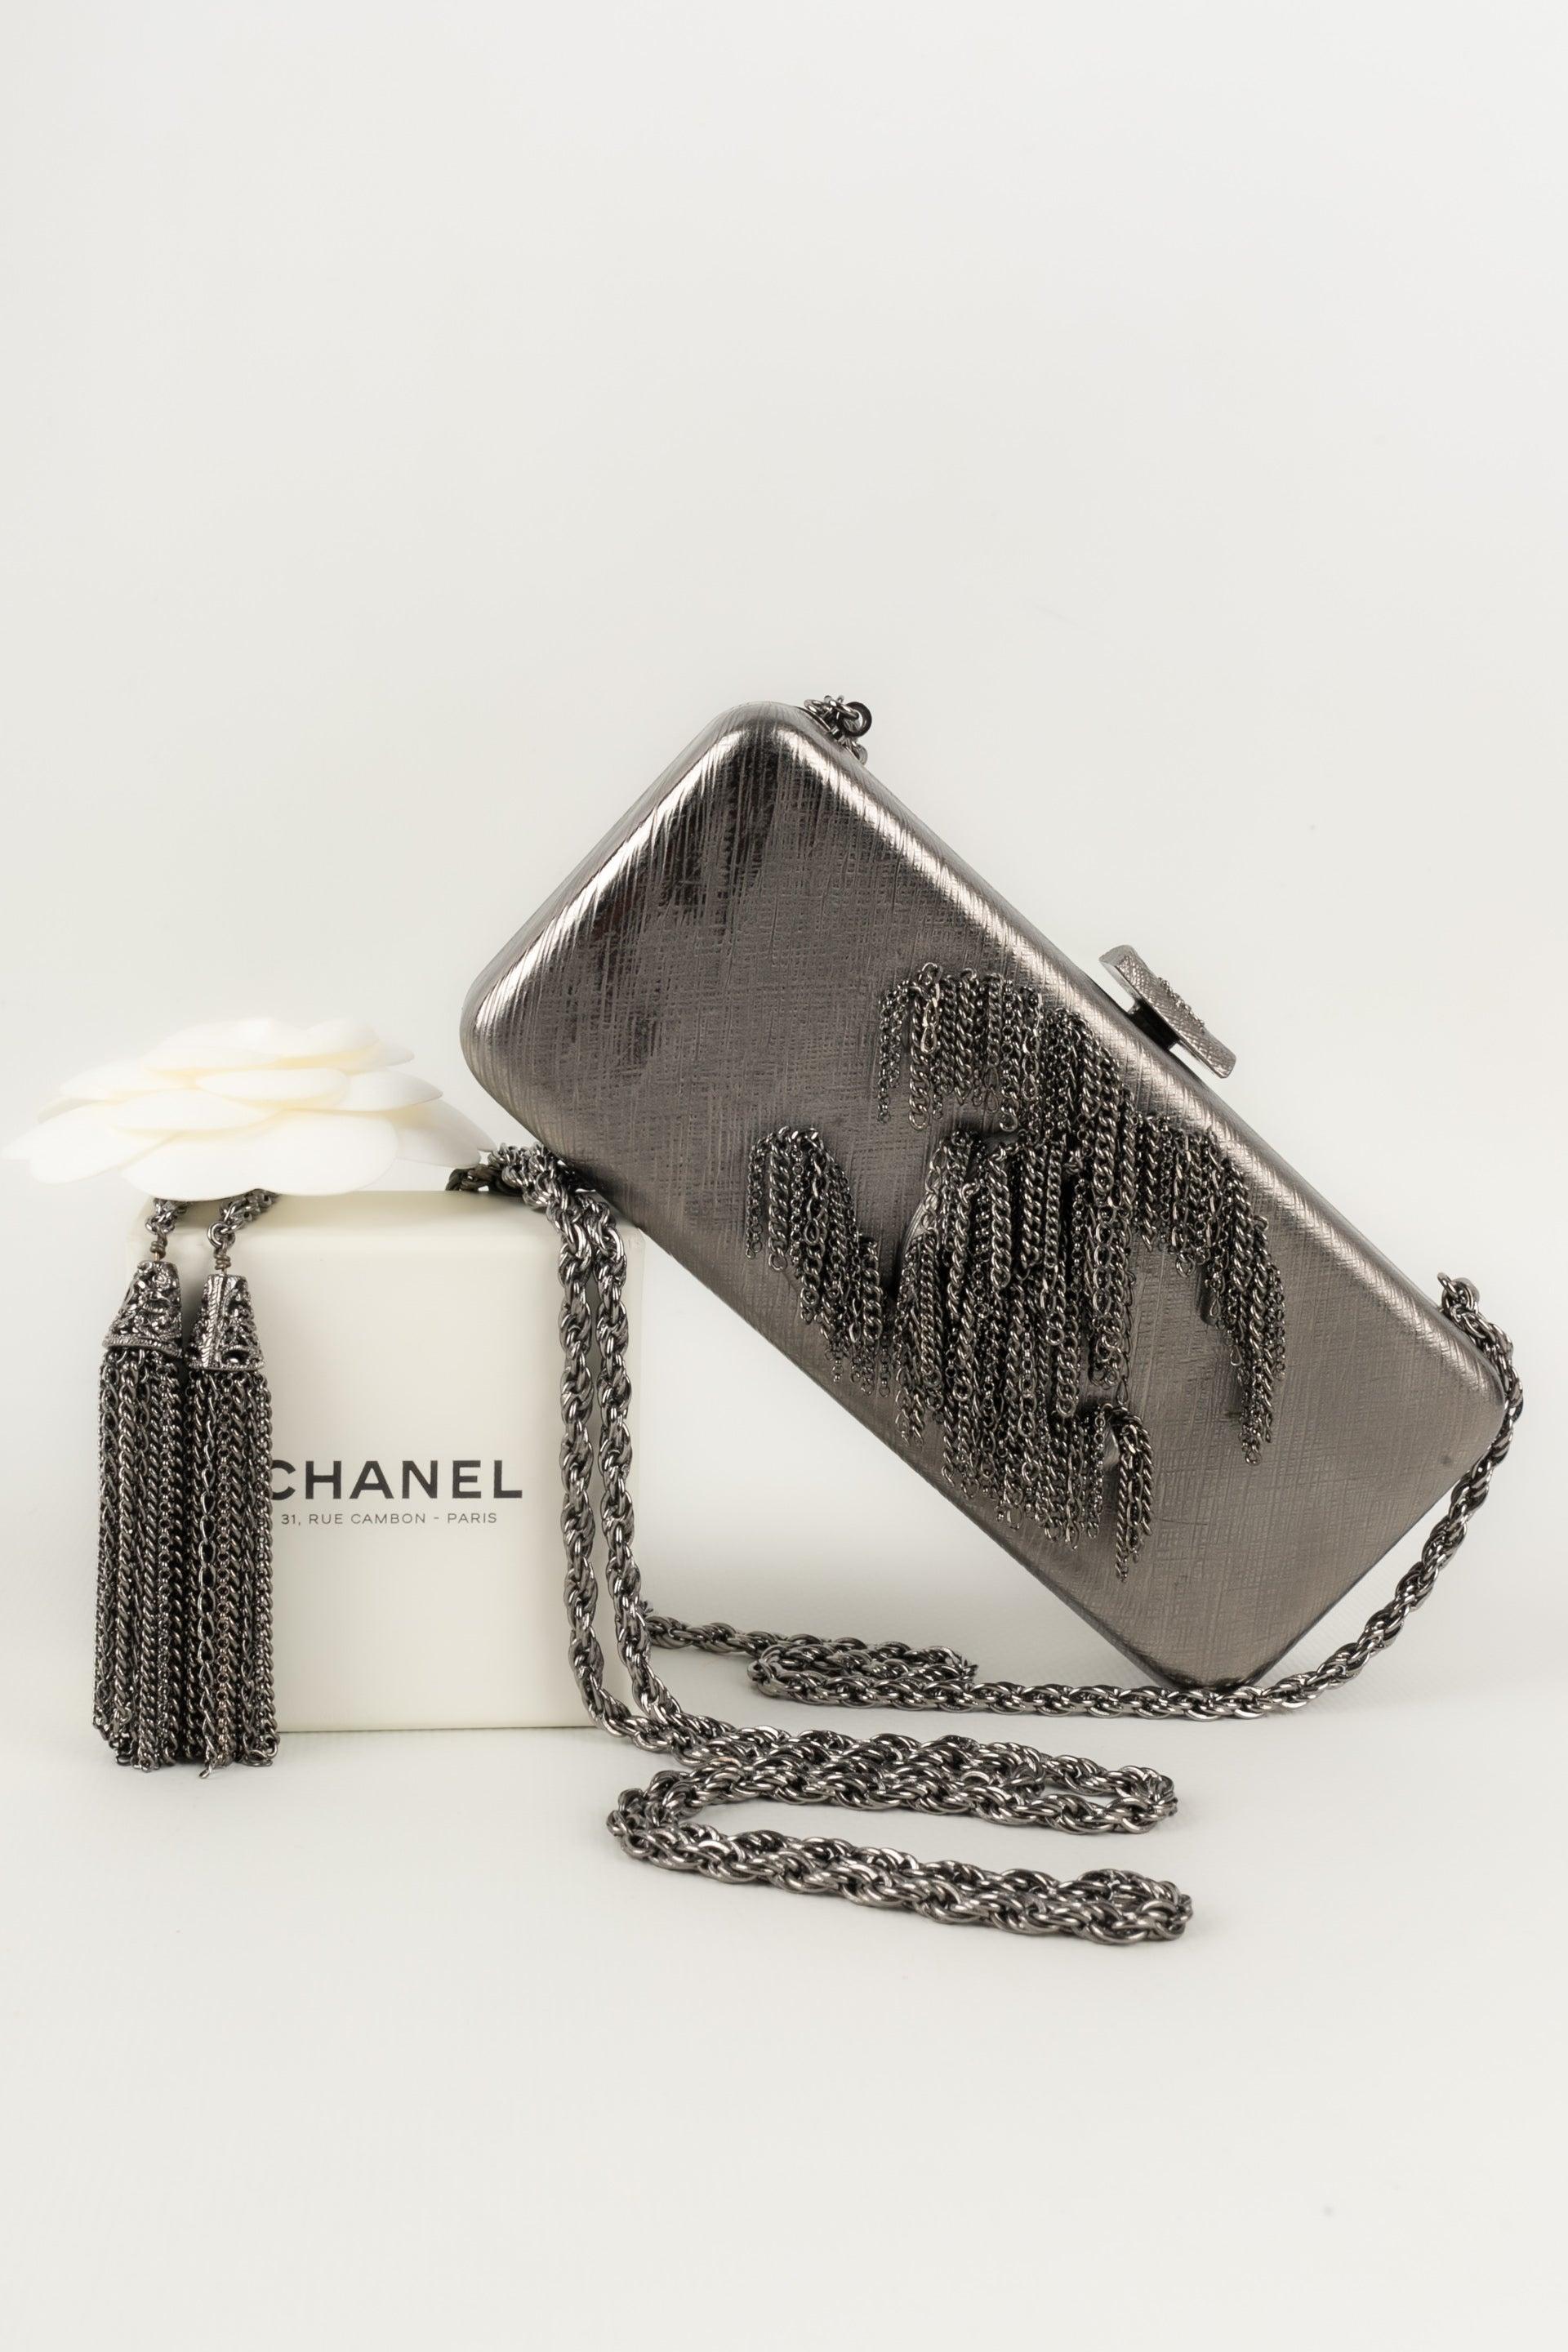 Chanel Engraved Dark-silvery Metal Clutch with CC Logo, 2004/2005 8